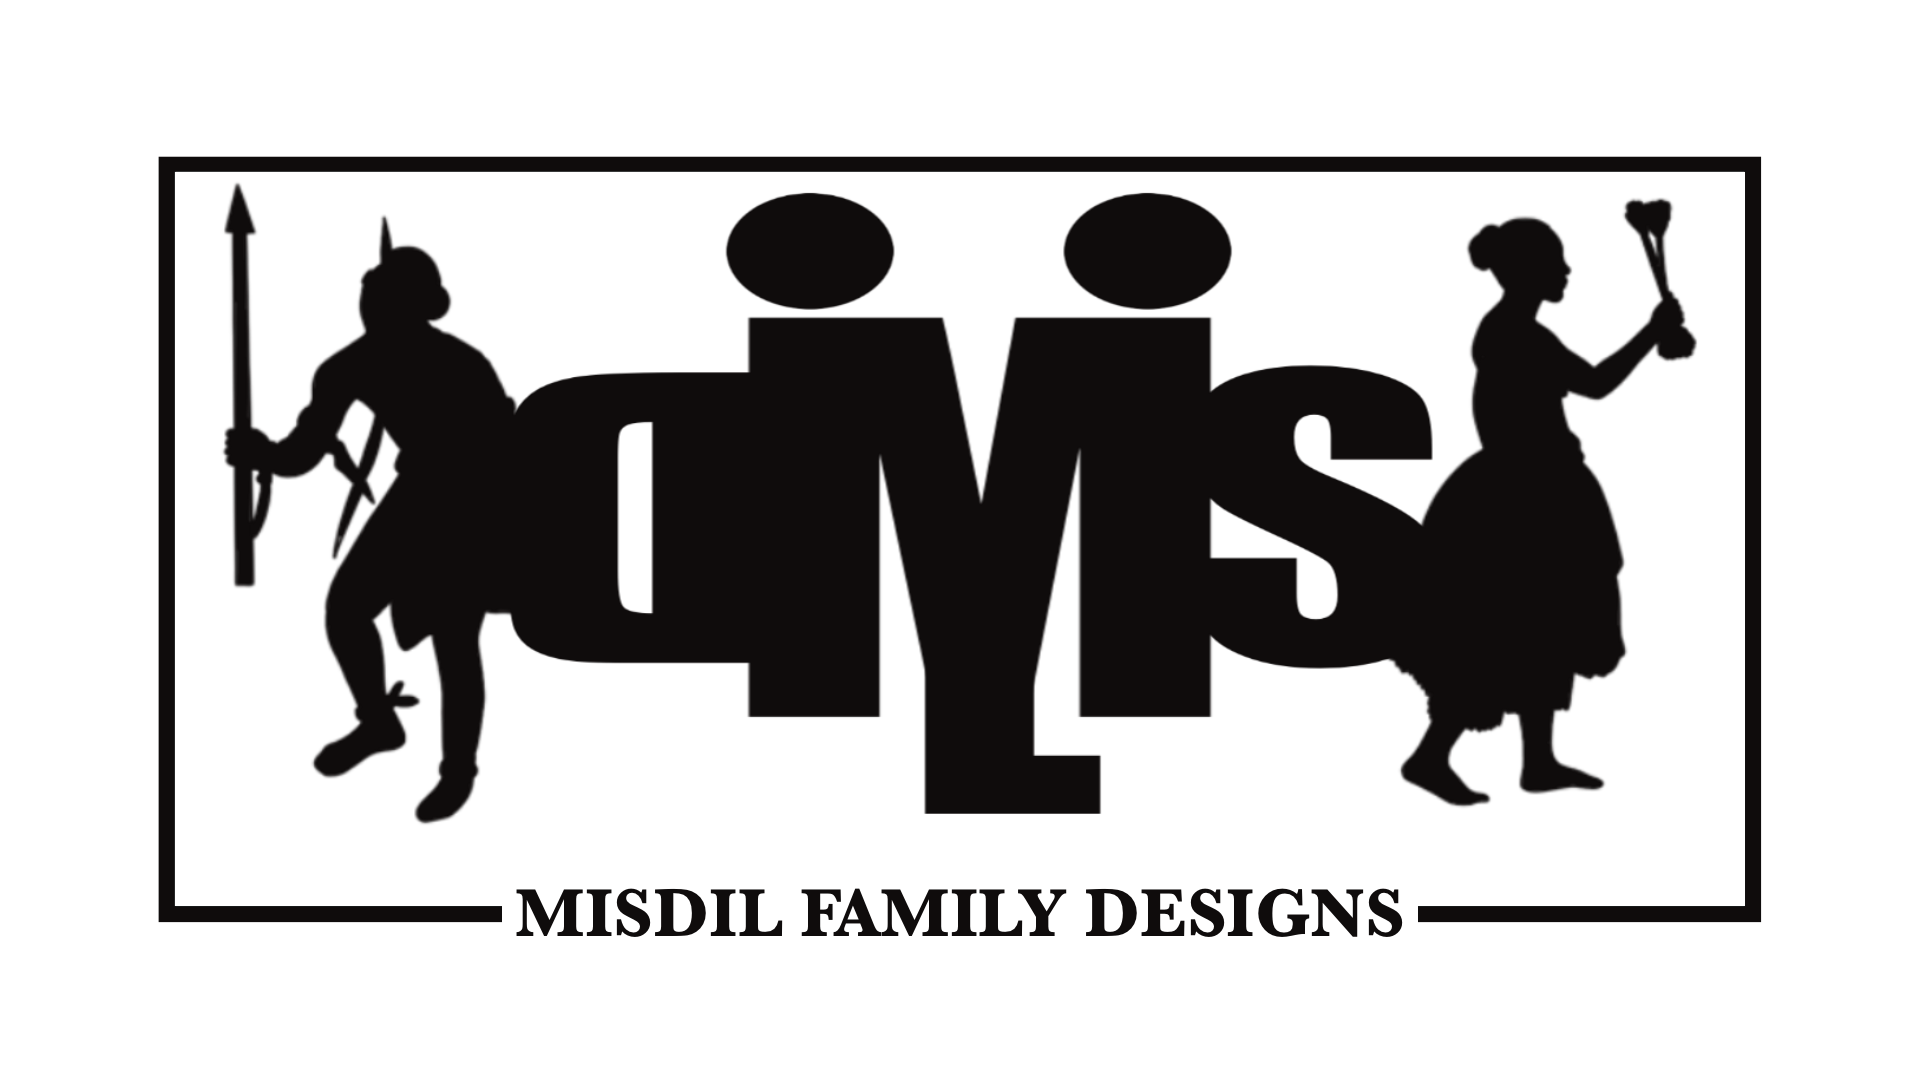 MISDIL FAMILY DESIGNS